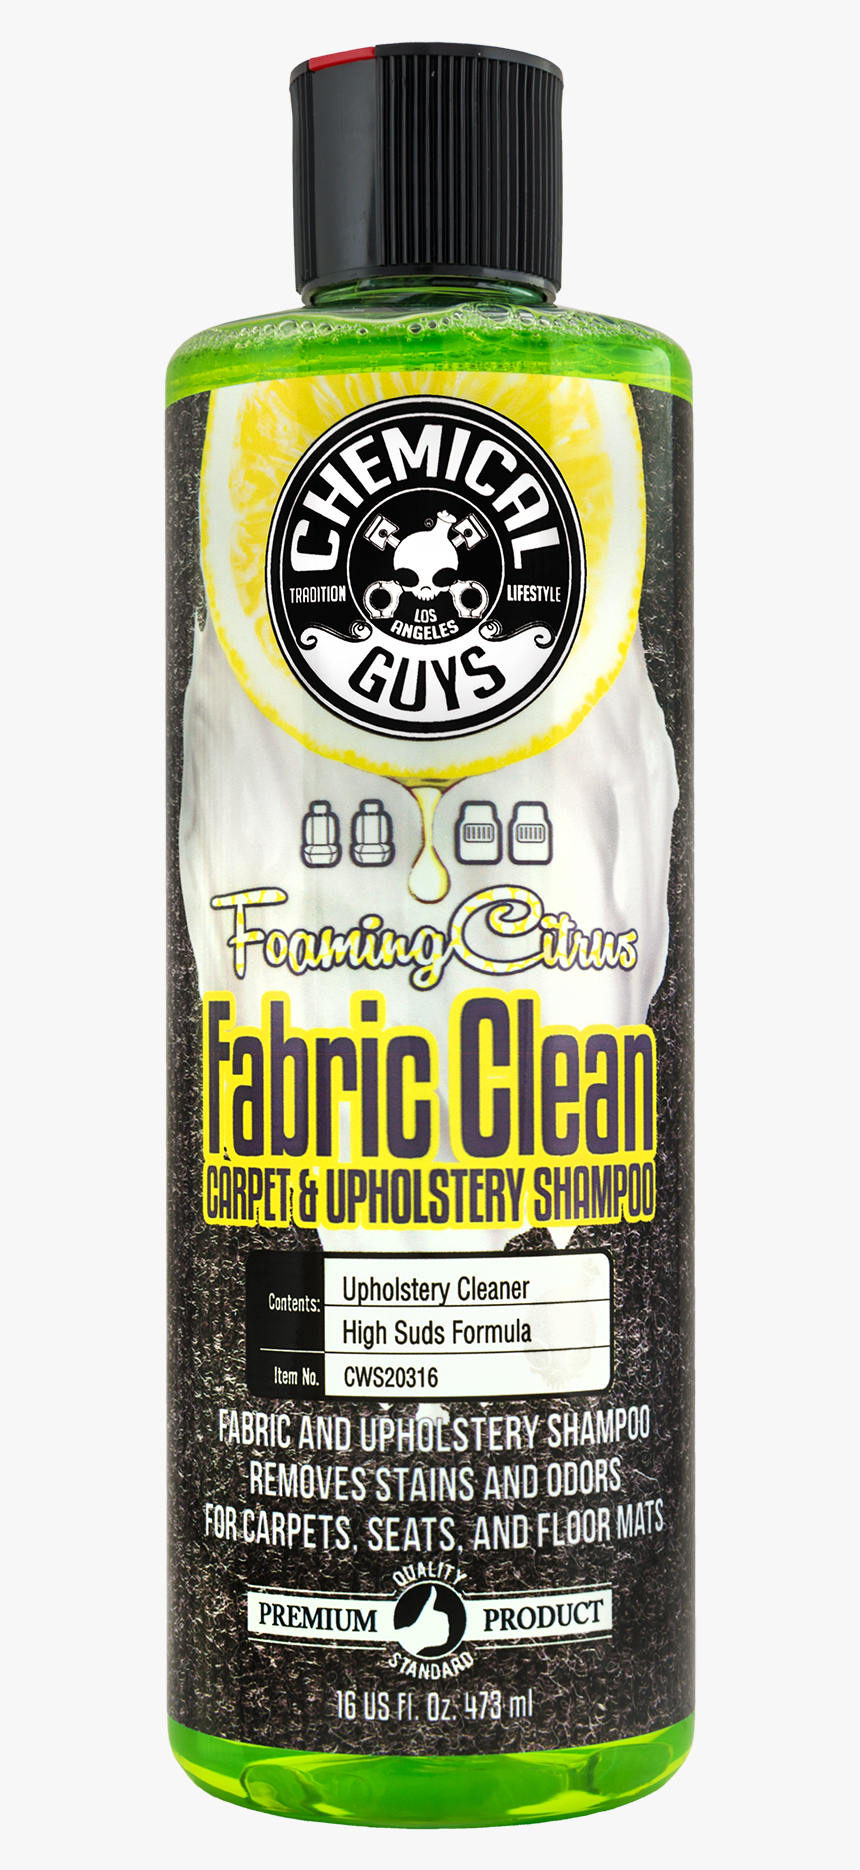 Foaming Citrus Fabric Clean Carpet & Upholstery Shampoo